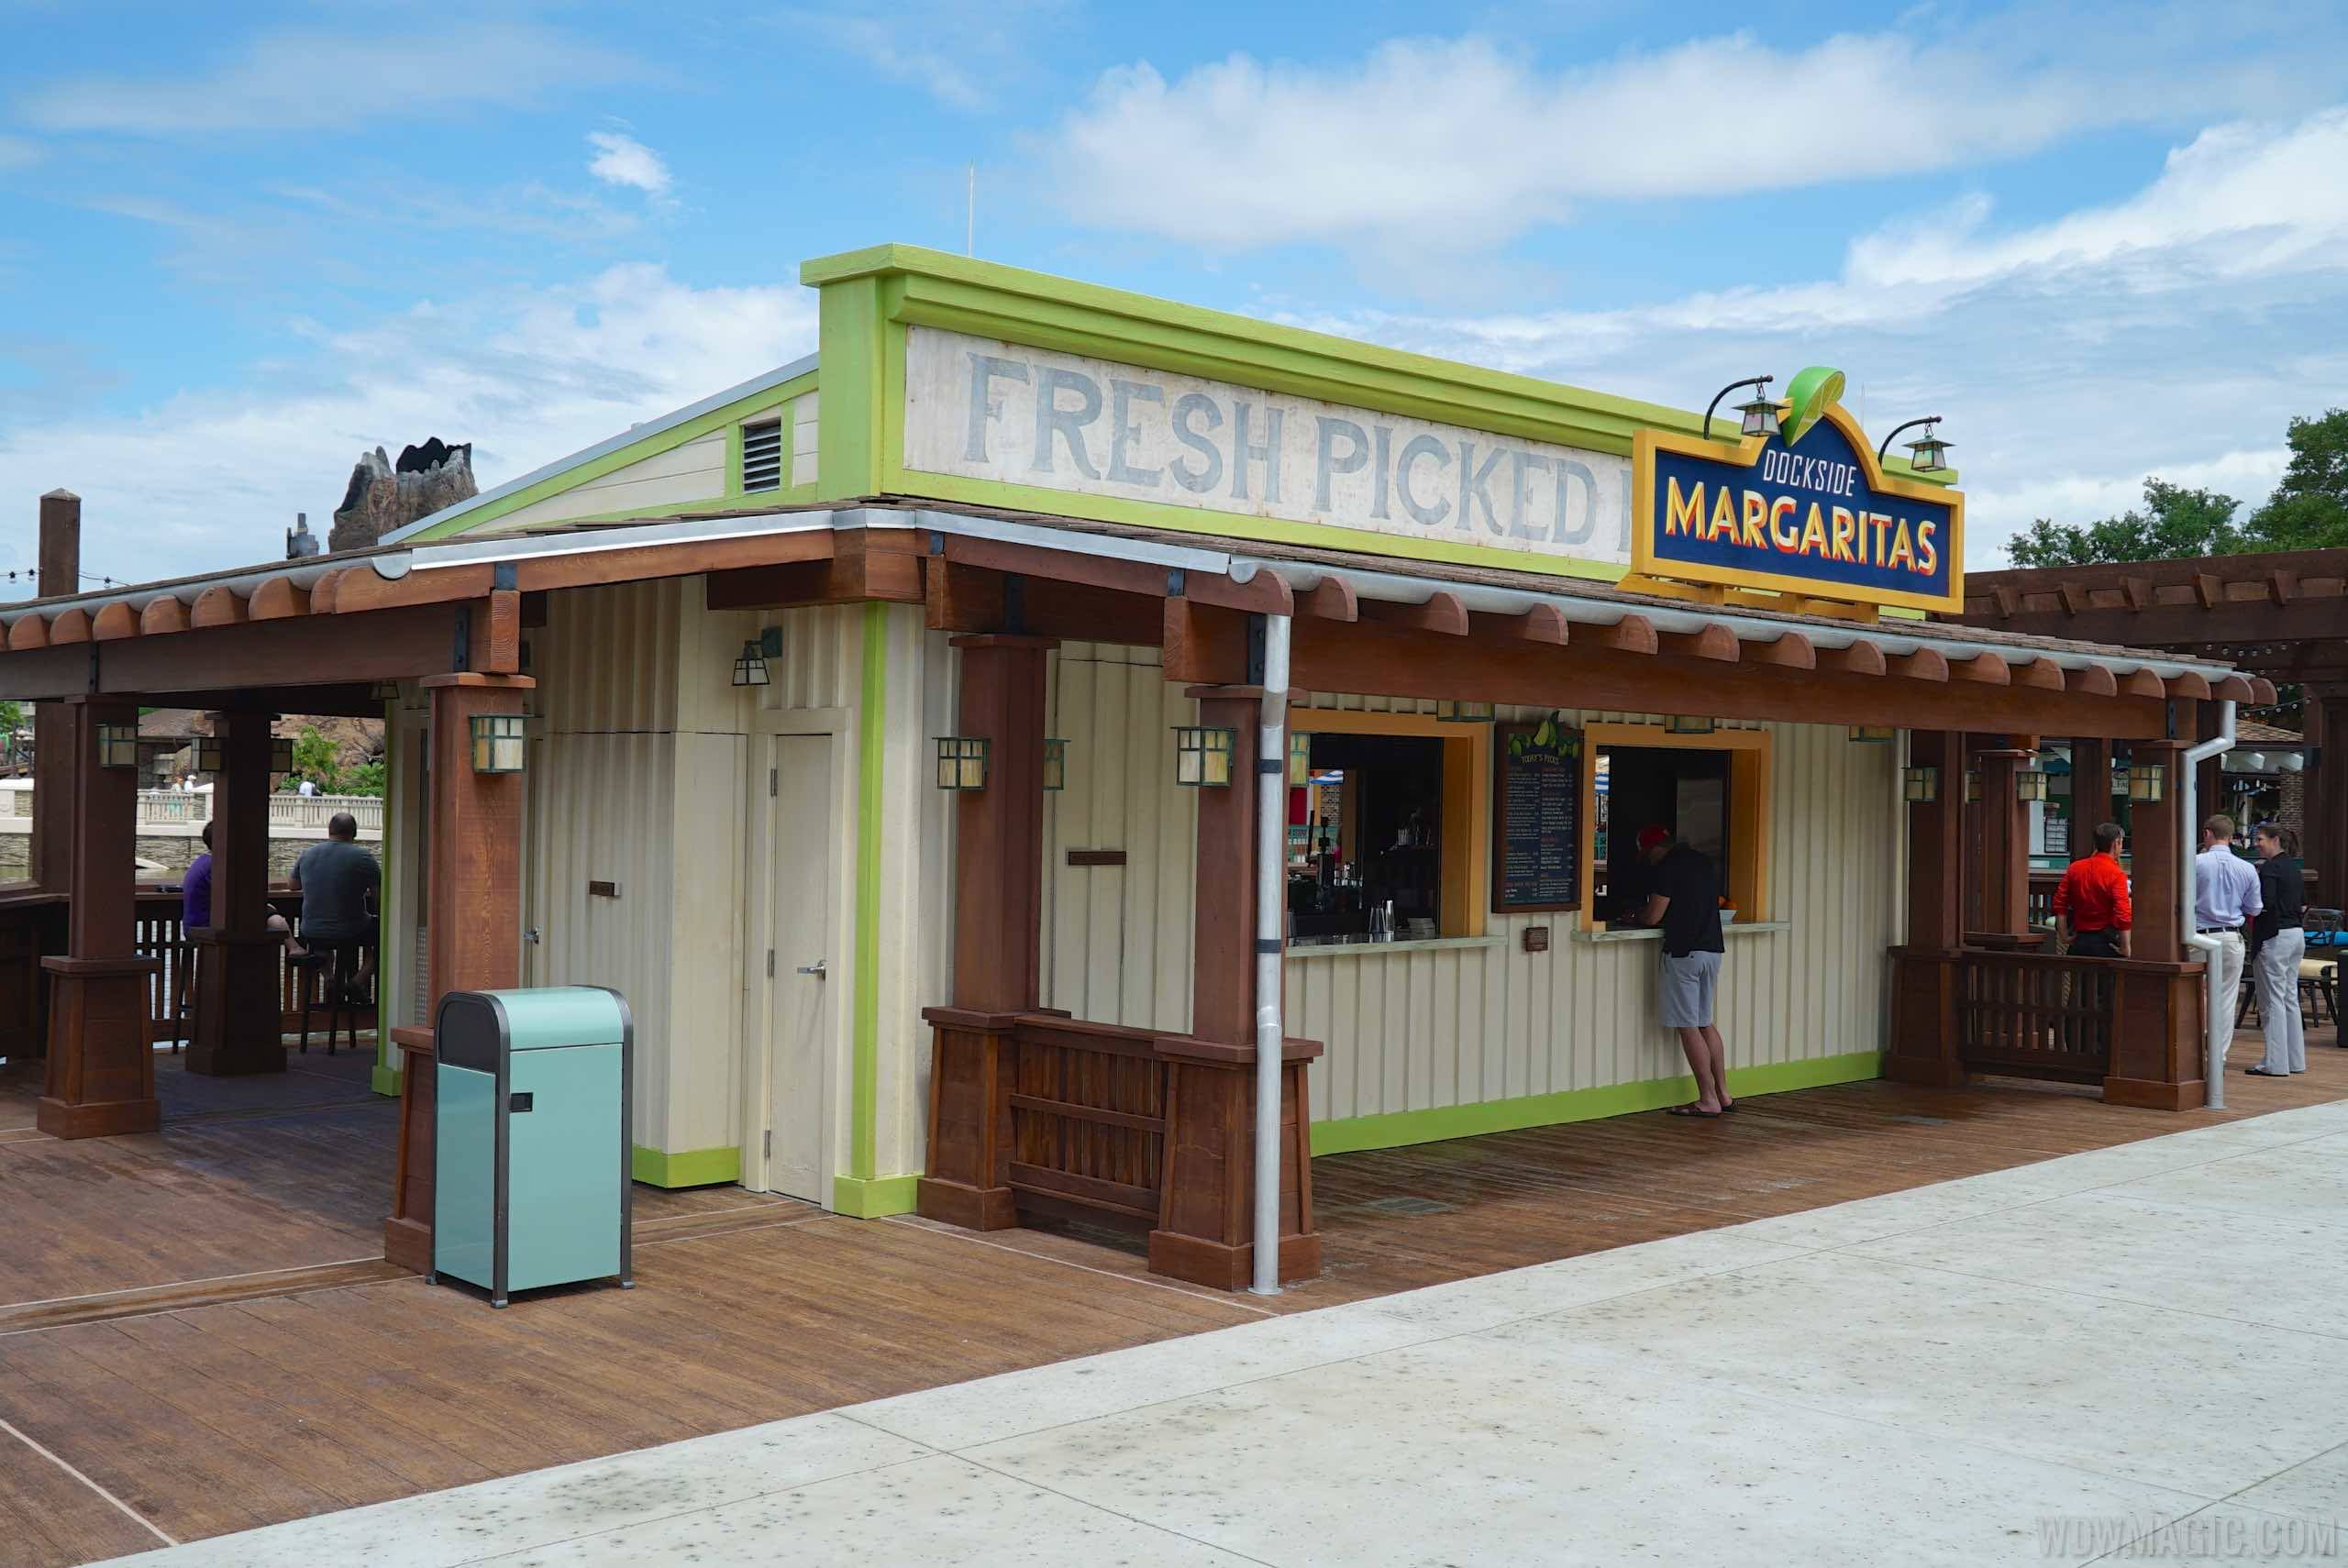 Dockside Margaritas now offering food via Fantasy Fare Food Truck